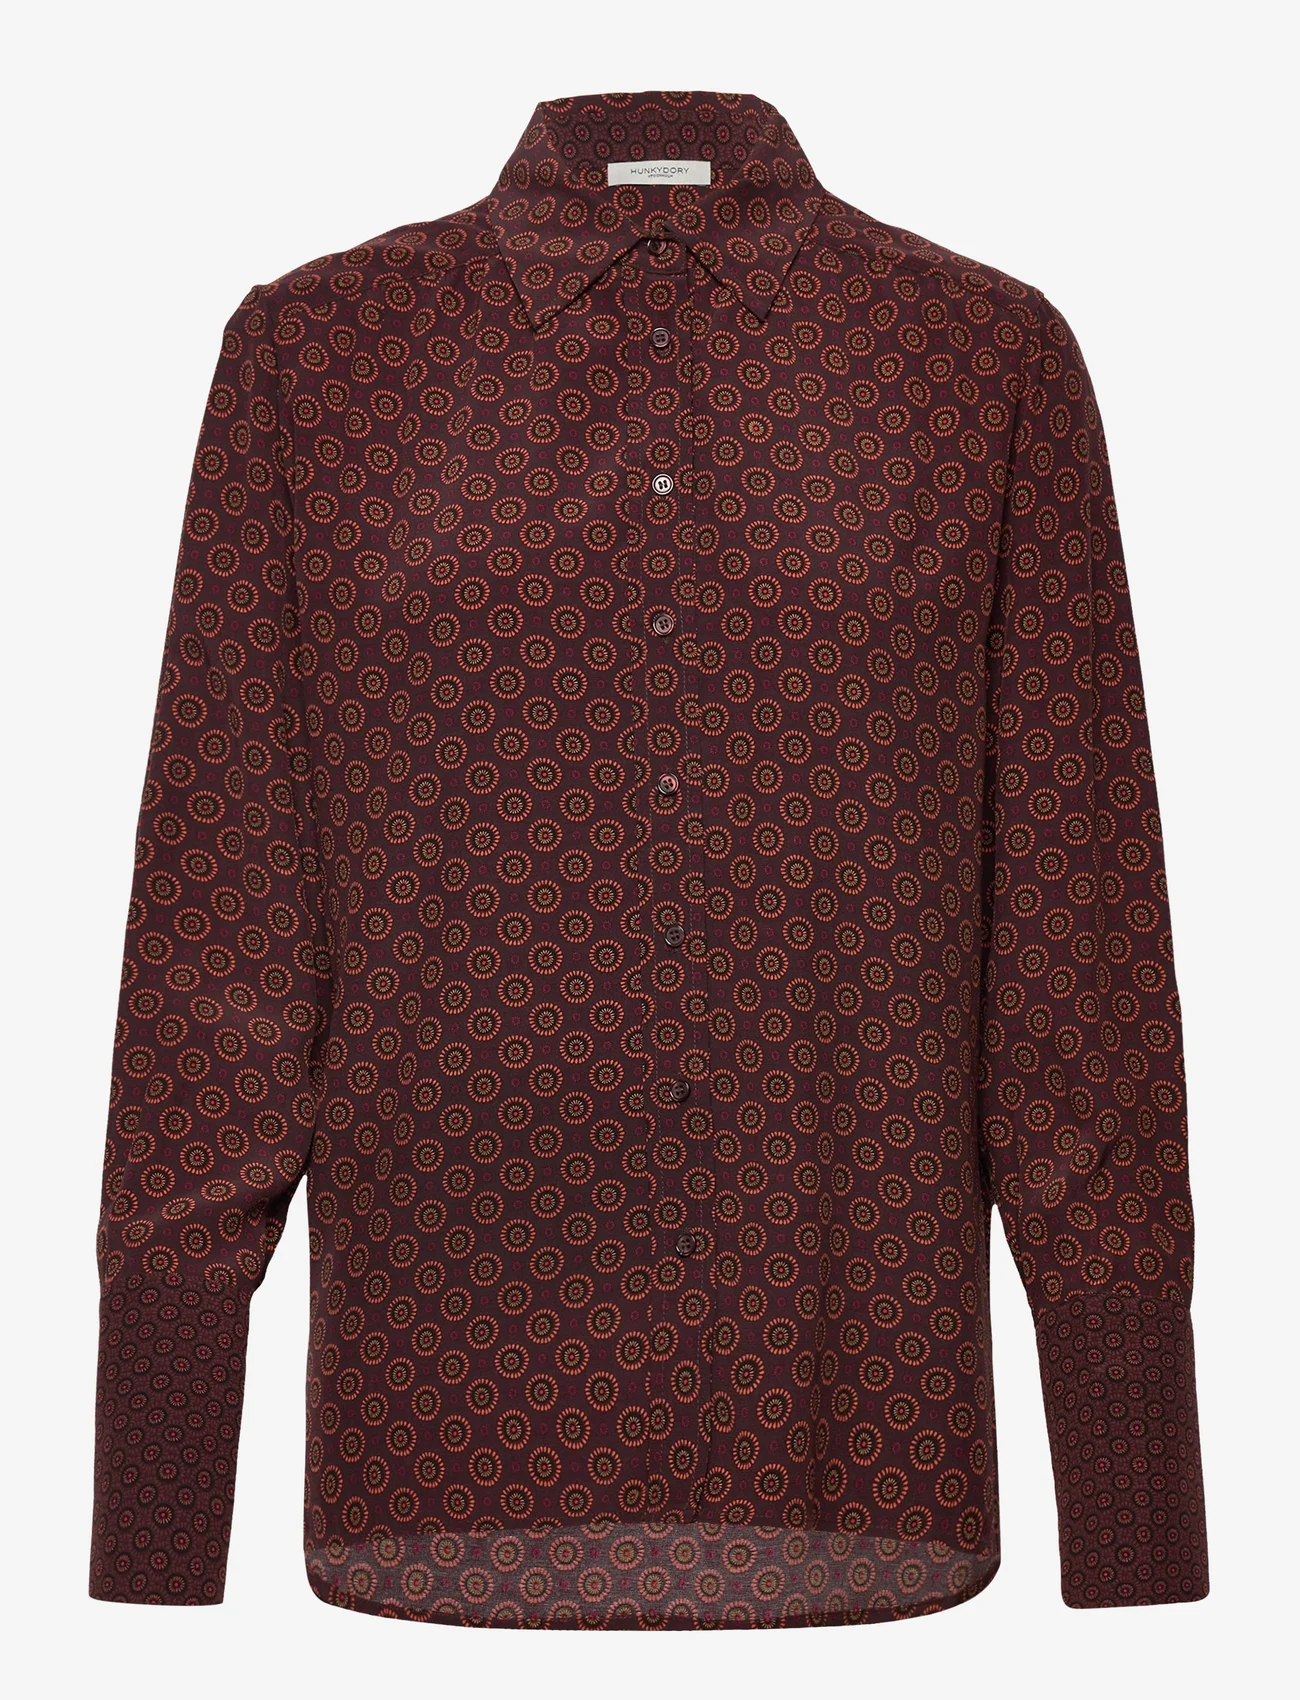 HUNKYDORY - Ellie Shirt - långärmade skjortor - chocolate brown aop - 0